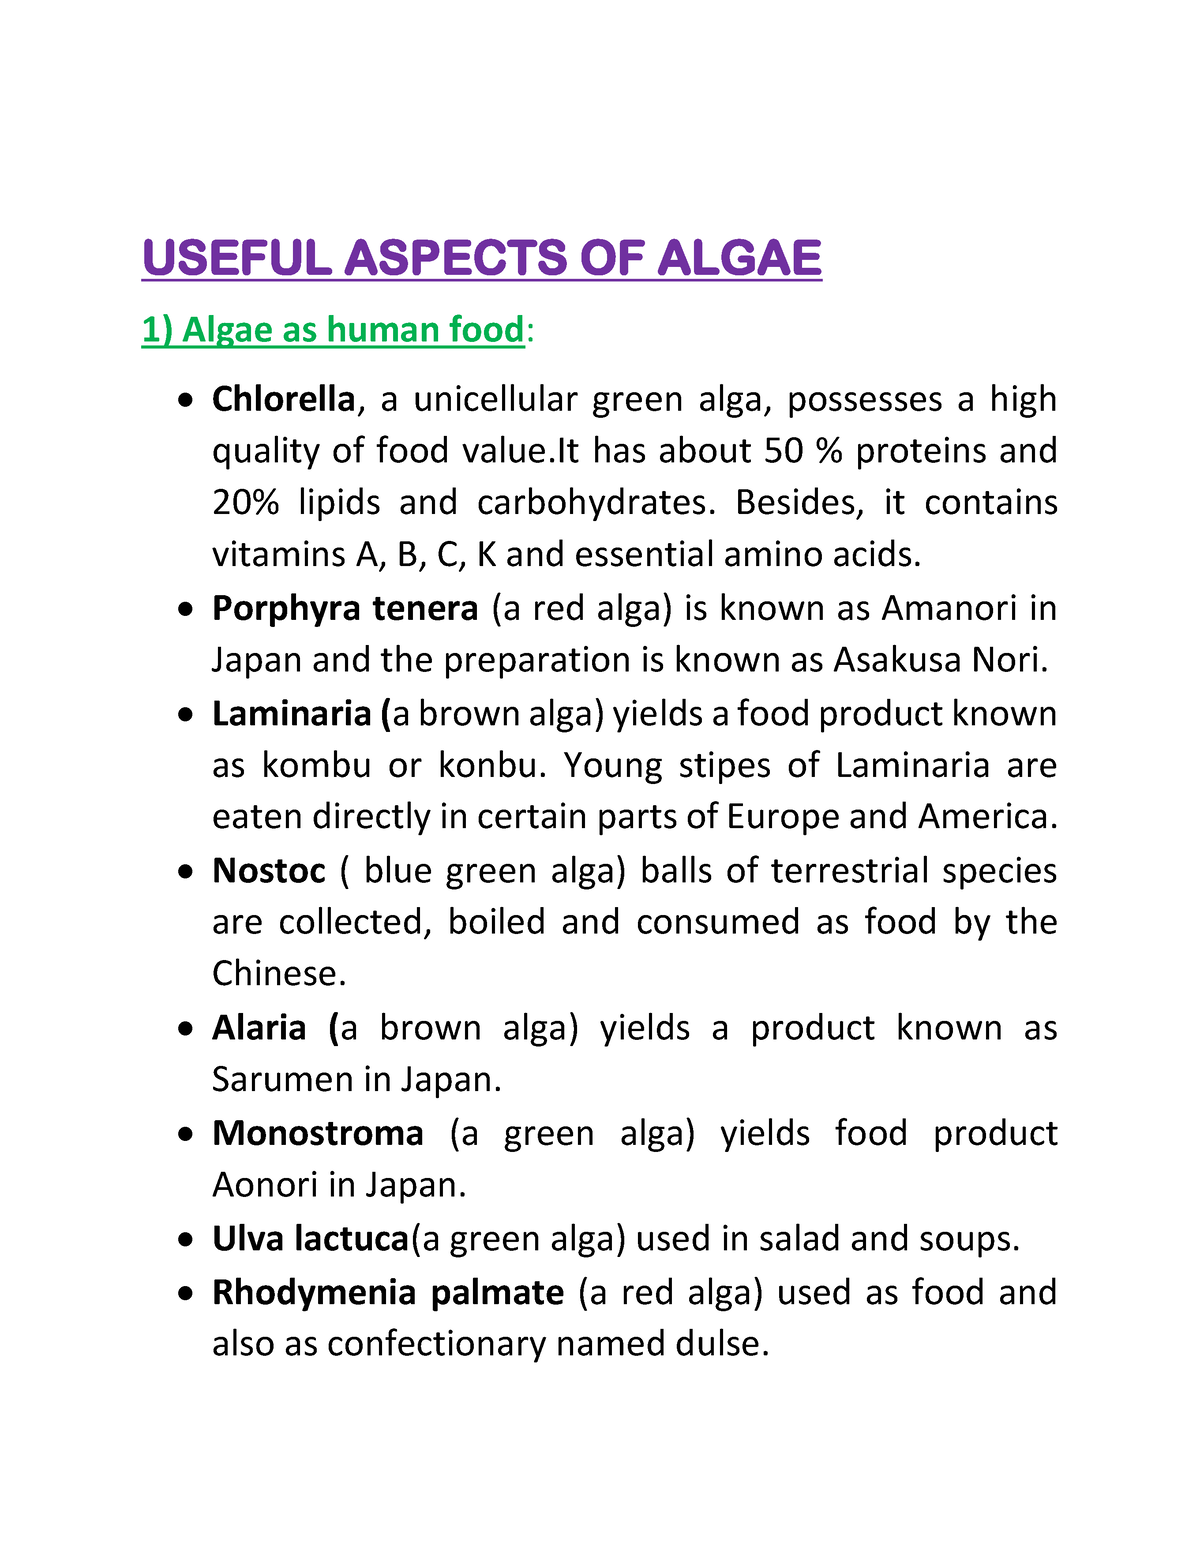 write an essay on the economic importance of algae